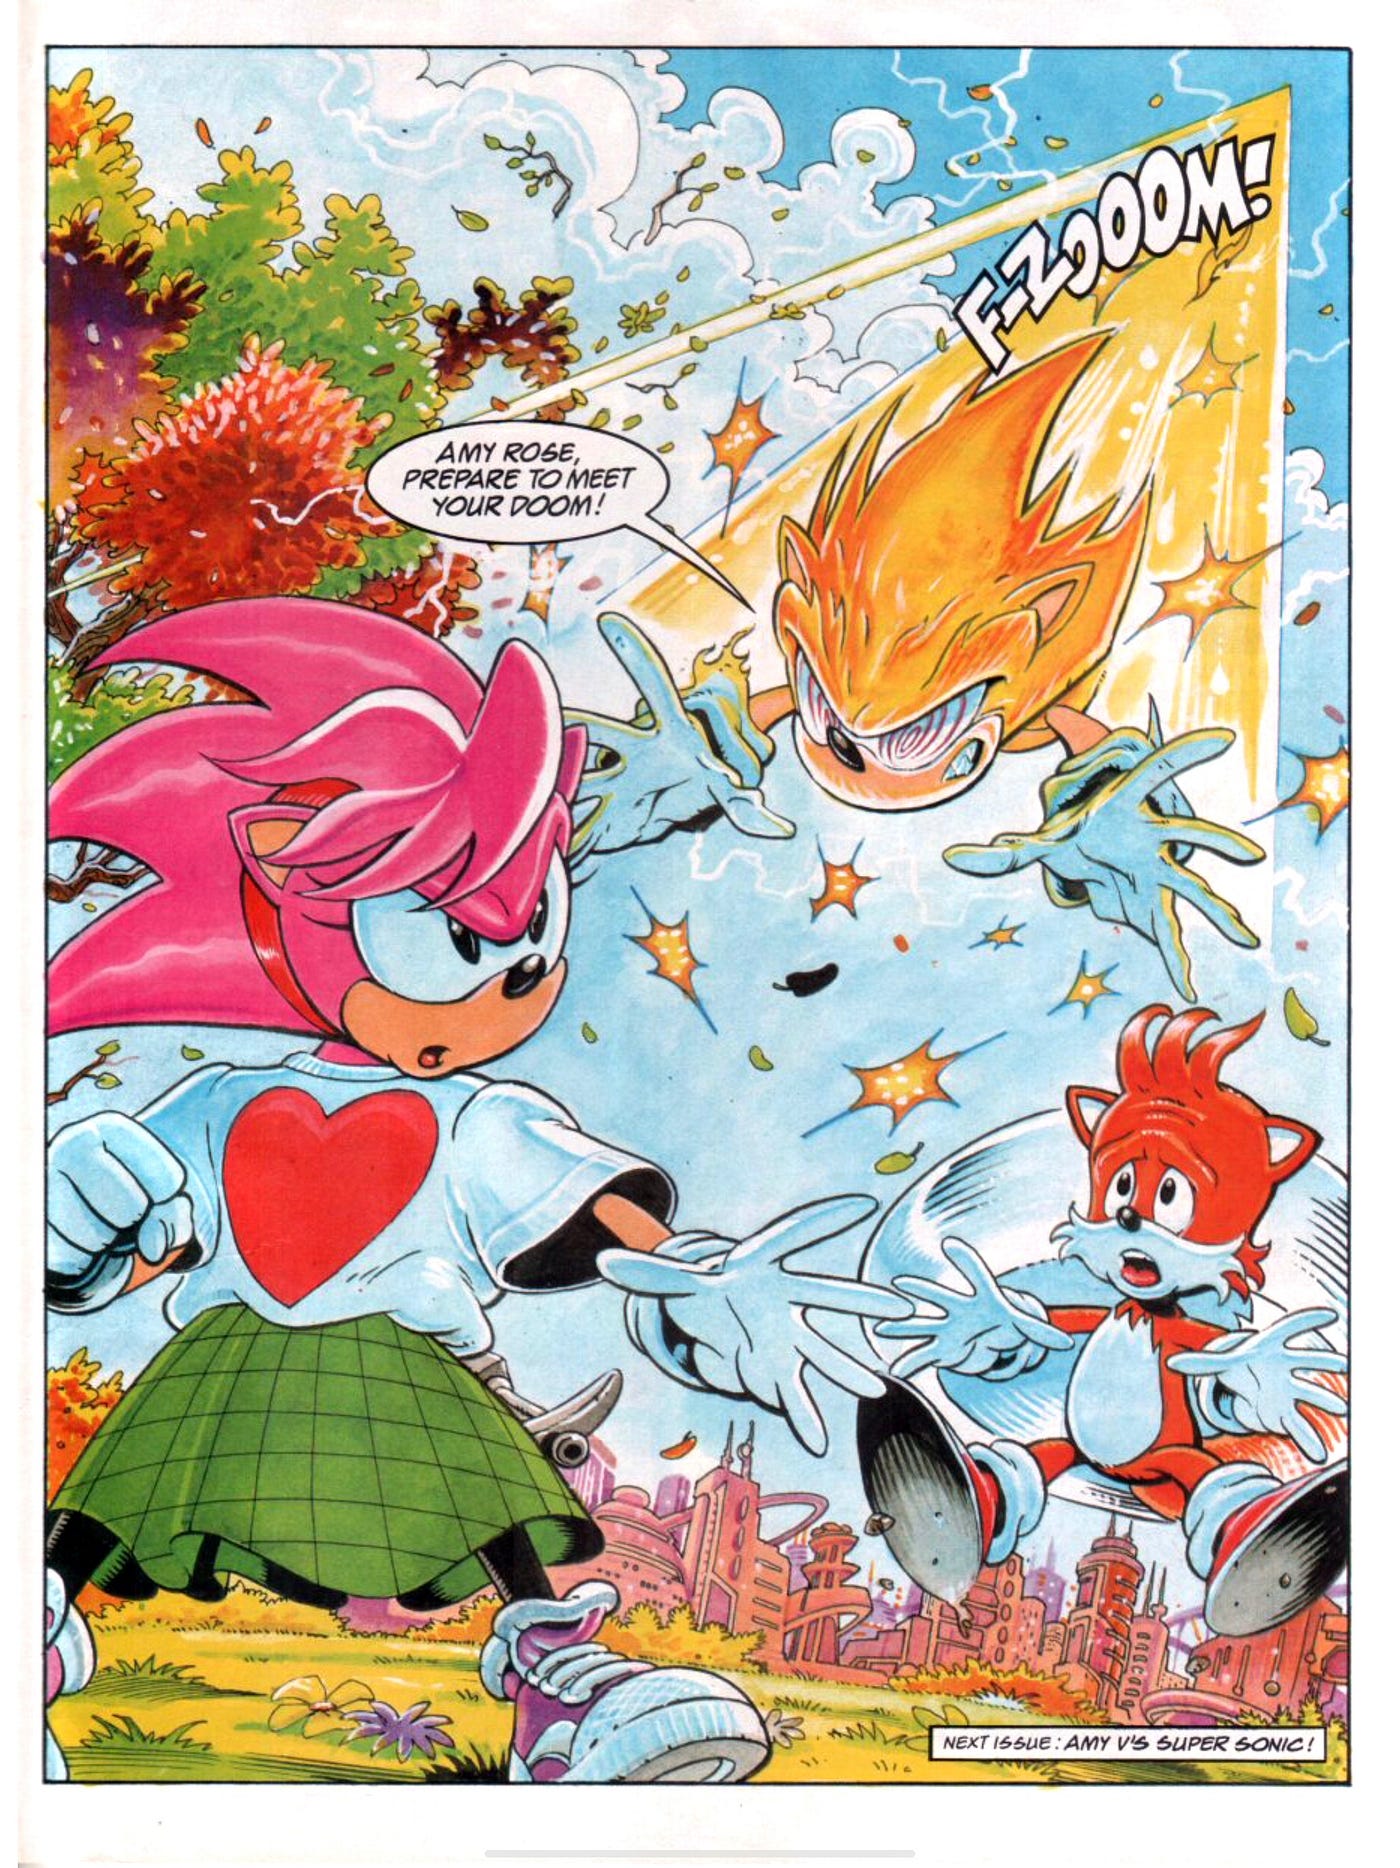 Sonic The Comic CD : Nigel Kitching, Fleetway, SEGA : Free